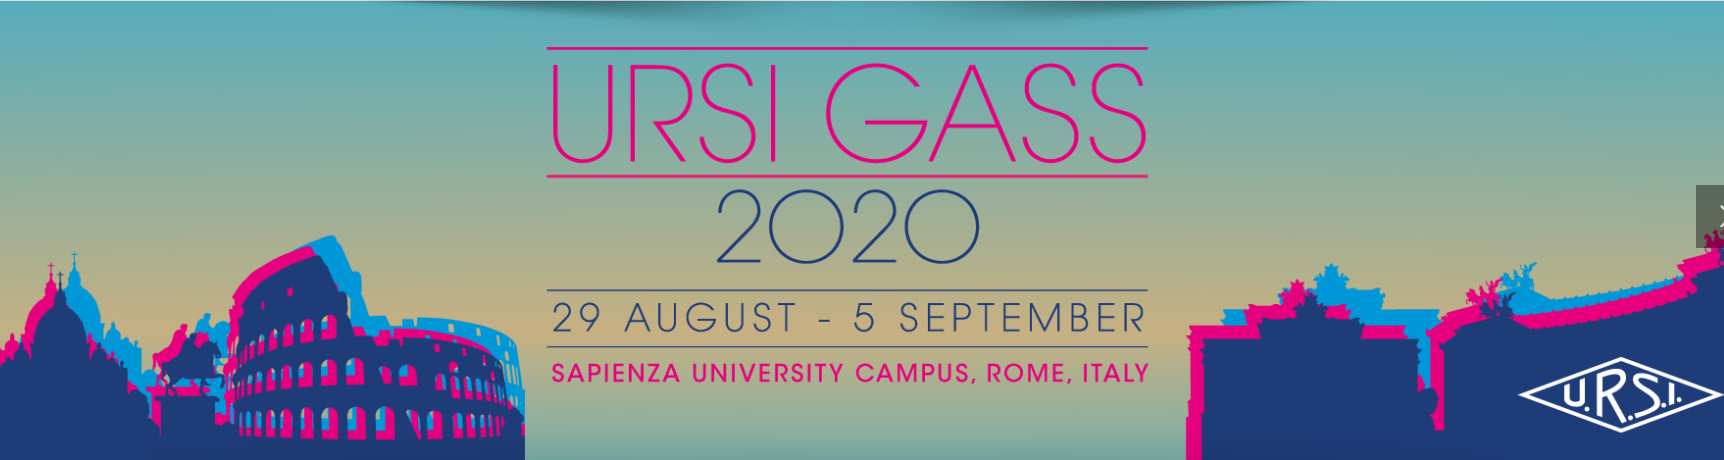 URSI_GASS_2020